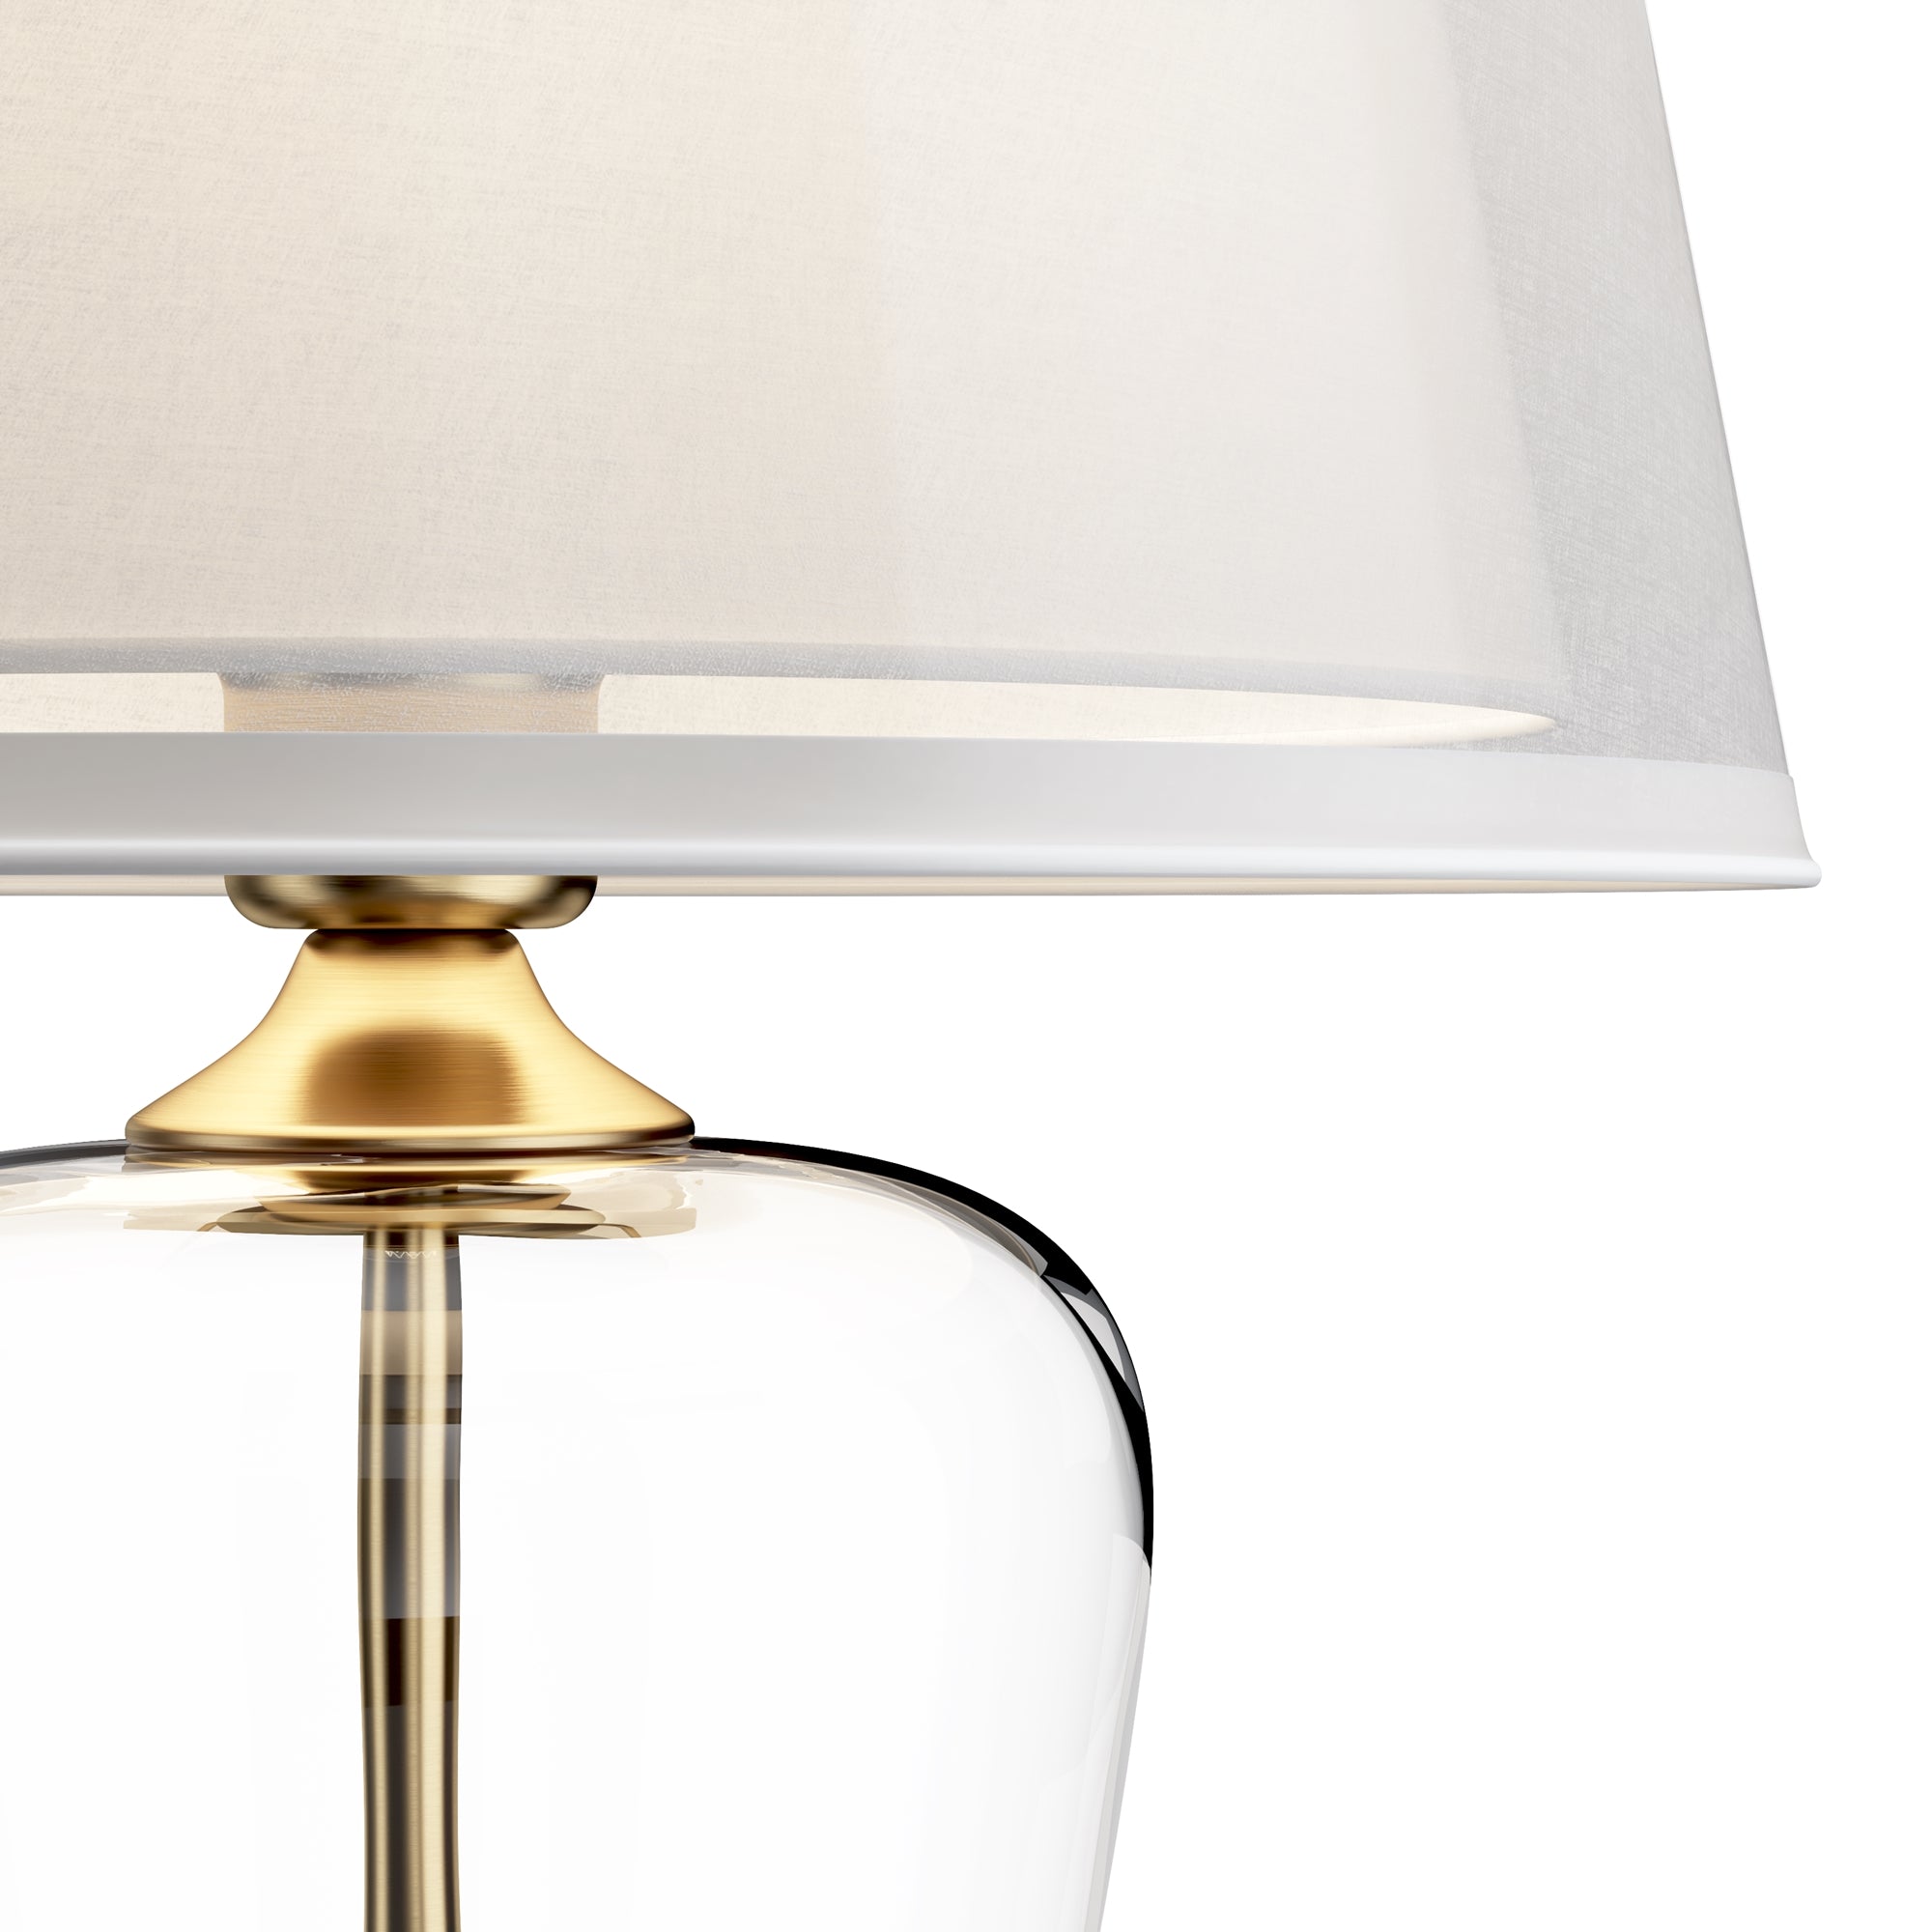 Verre Table Lamp - Brass Finish